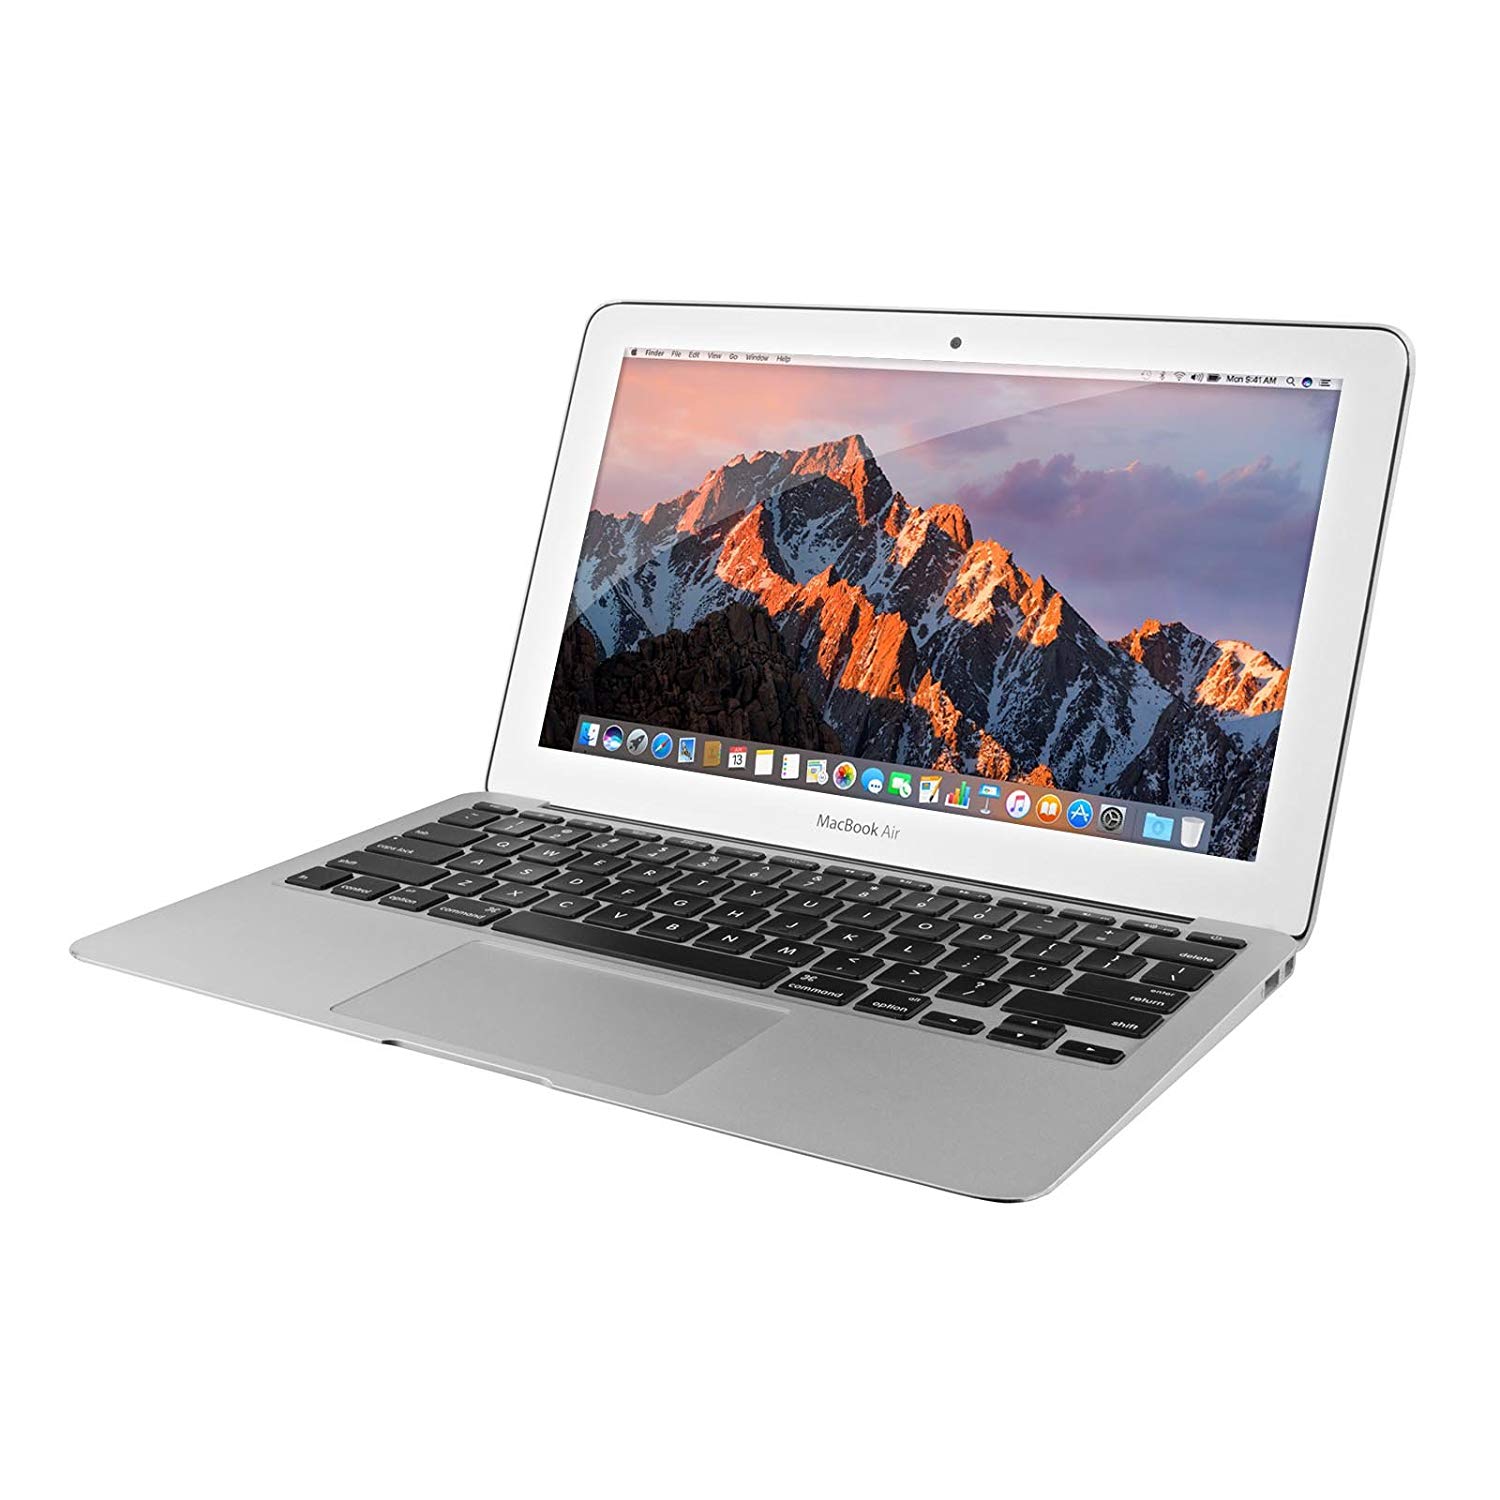 Restored Apple MacBook Air, 11.6" Laptop, Intel Core i5, 4GB RAM, 128GB SSD, No, Mac OS, Silver, MJVM2LL/A (Refurbished) - image 2 of 6